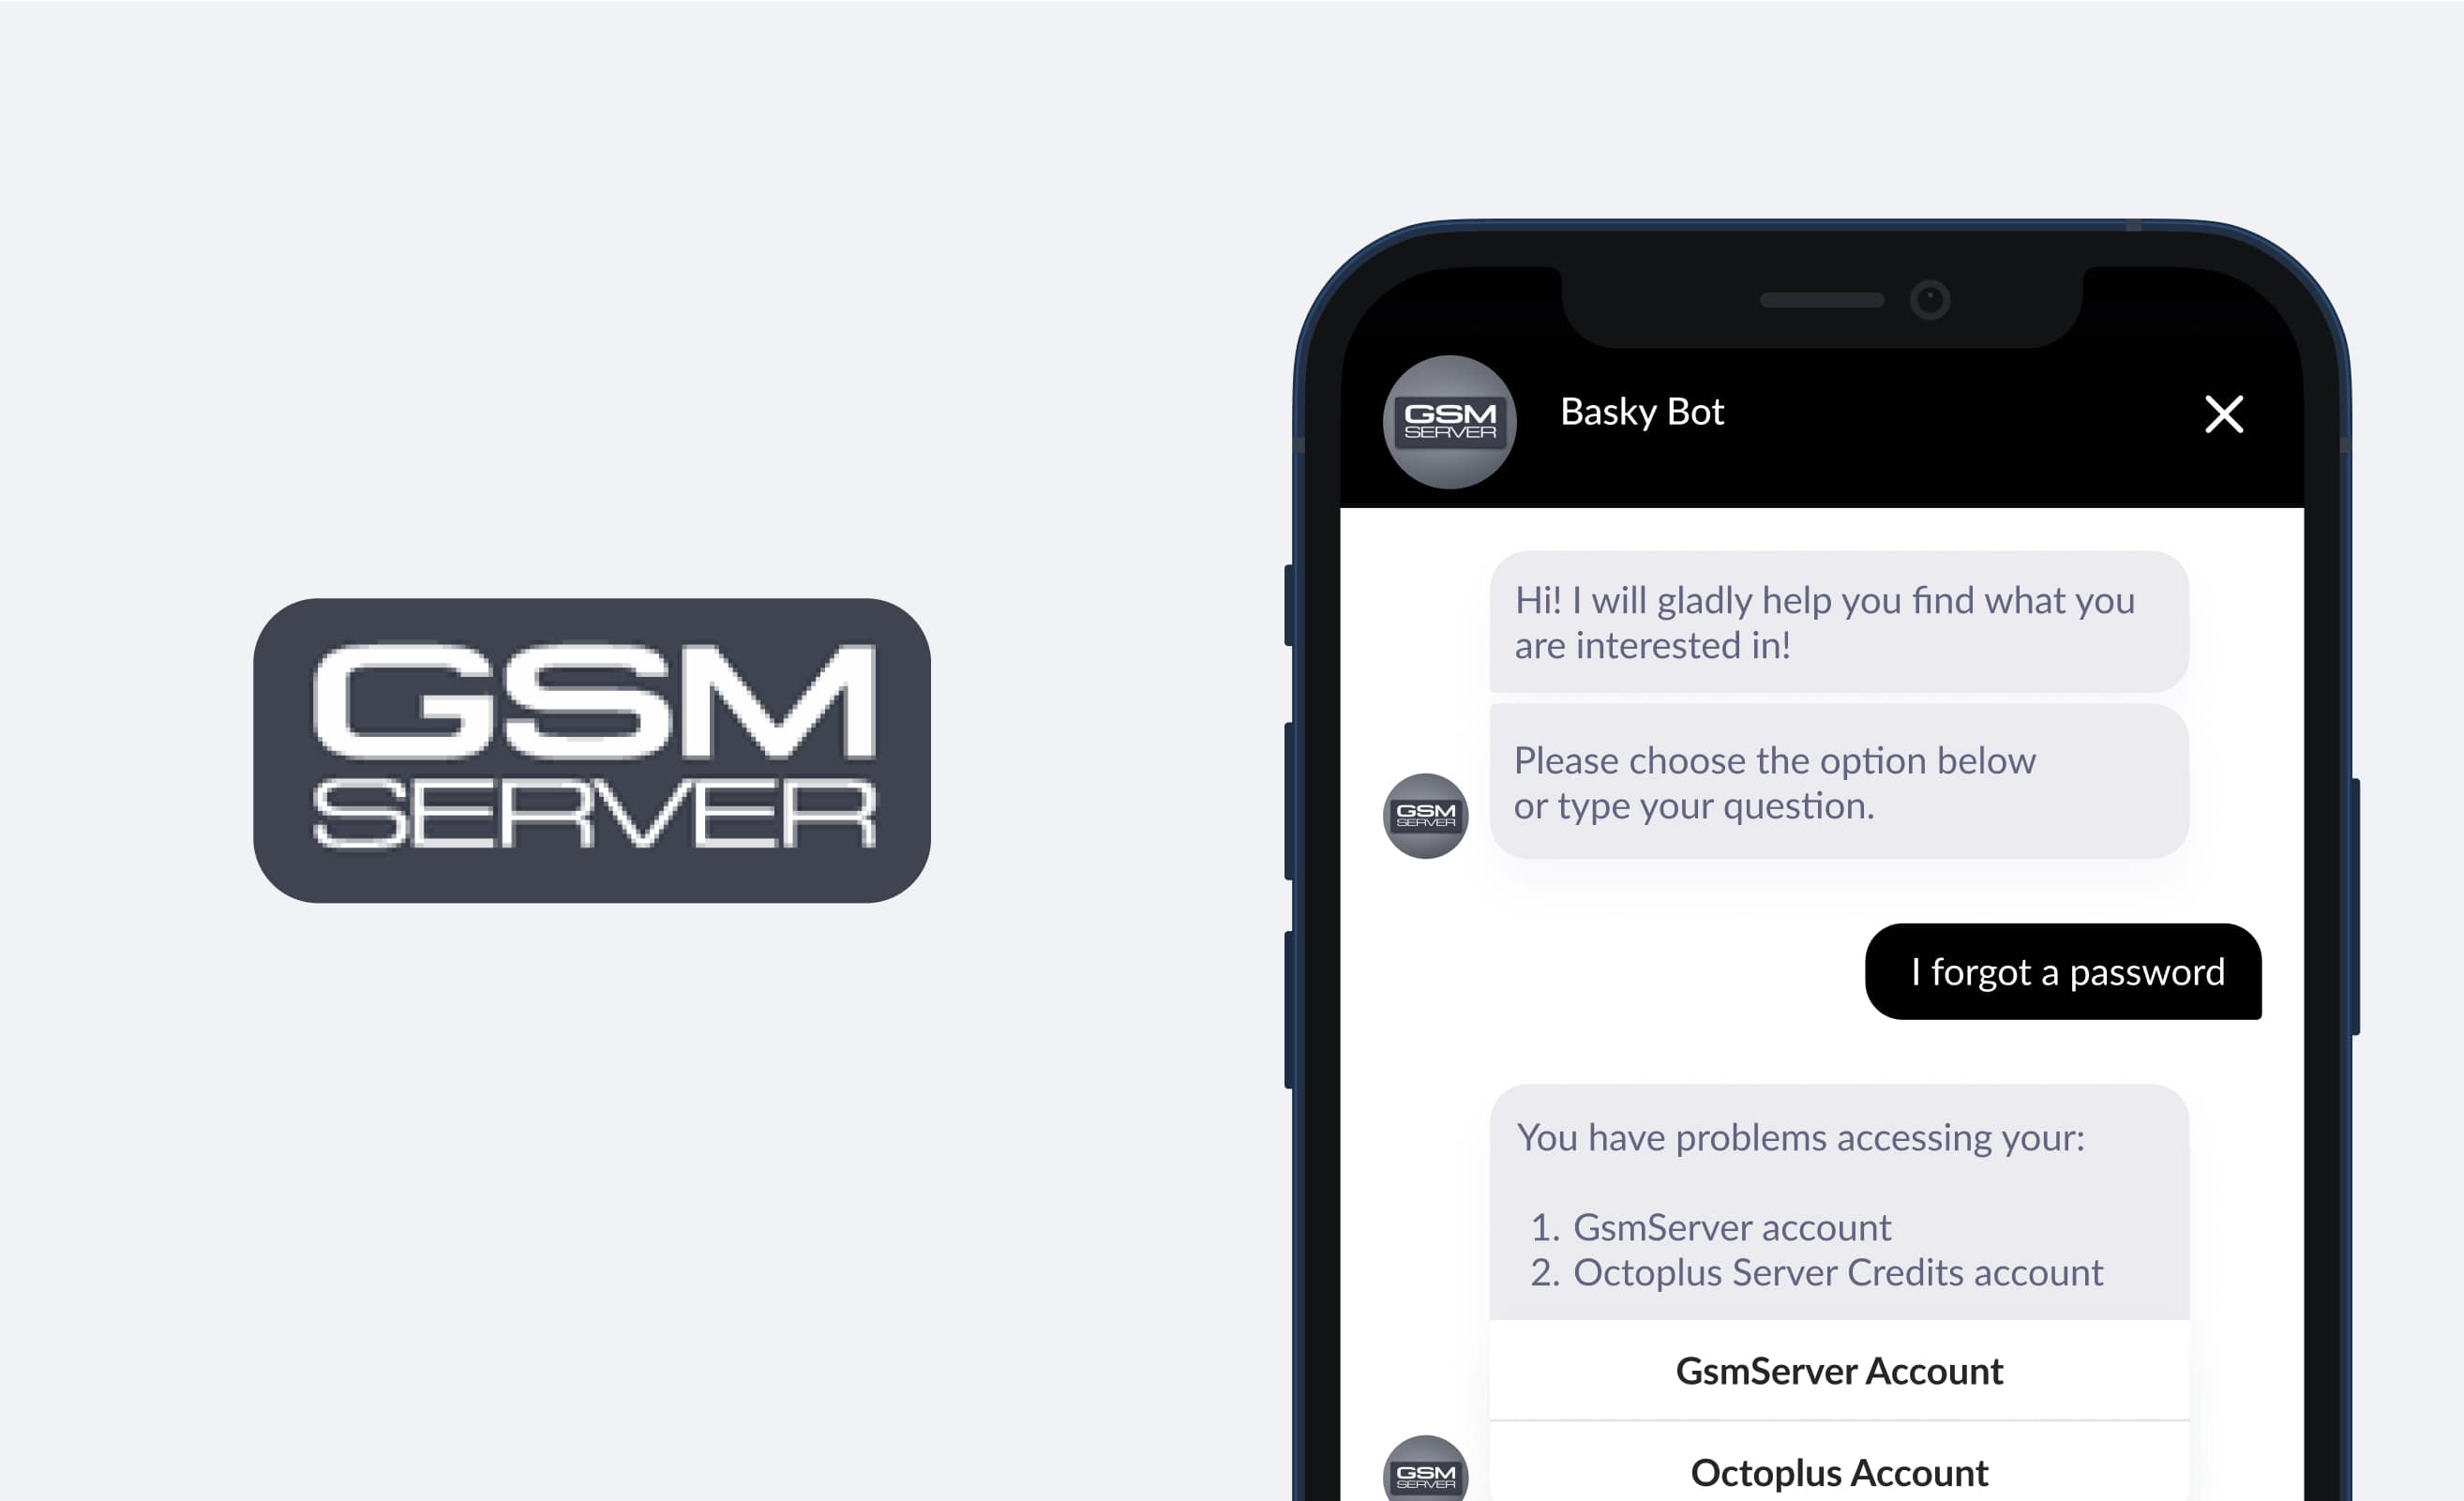 GSM Server chatbot